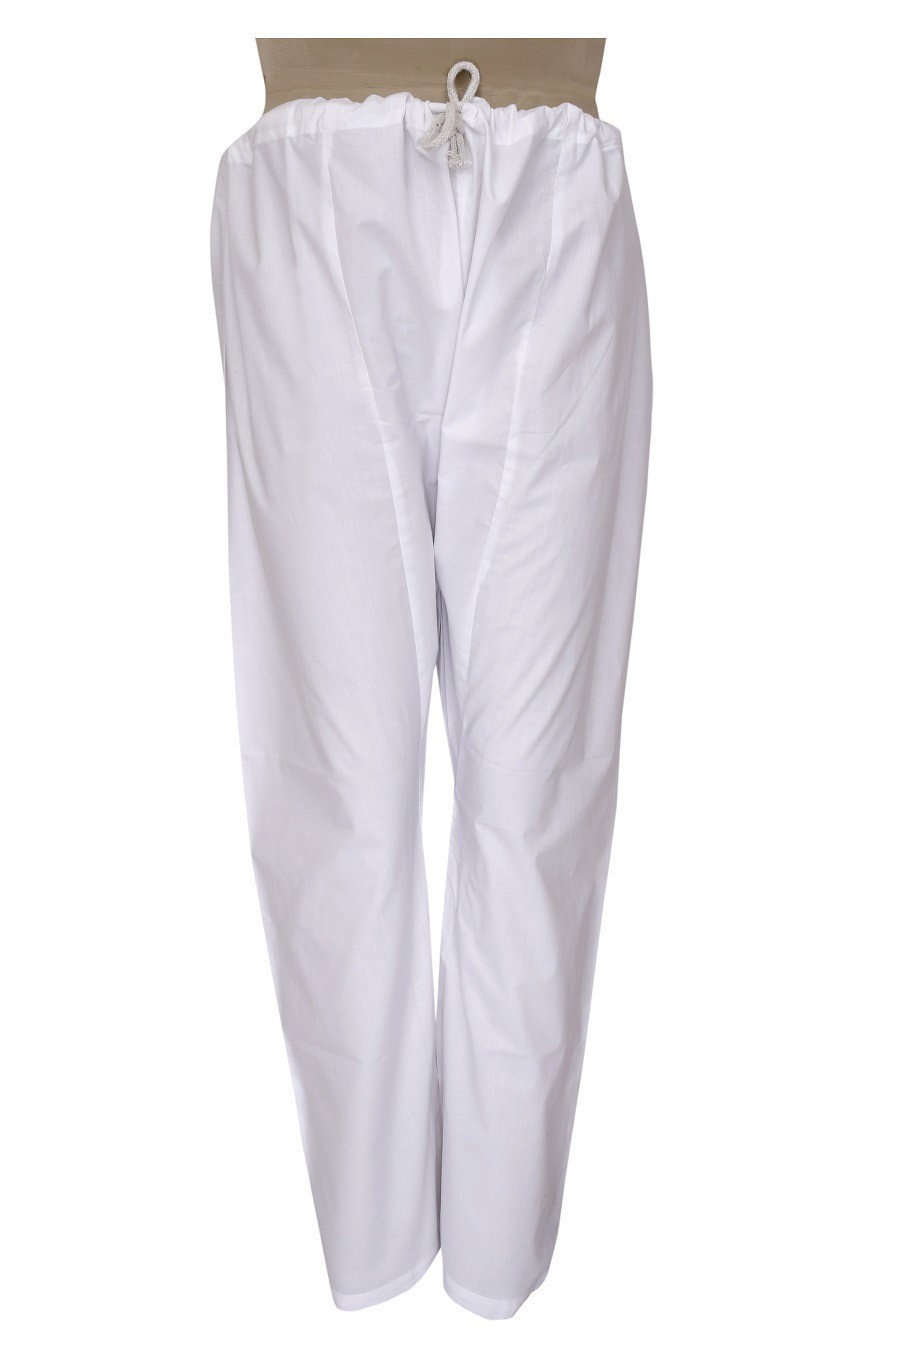 Hfyihgf Mens Cotton Linen Loose Fitting Casual Pants Lightweight Elastic  Waist Yoga Summer Beach Trousers Drawstring Pants with Pockets(White,XL) -  Walmart.com